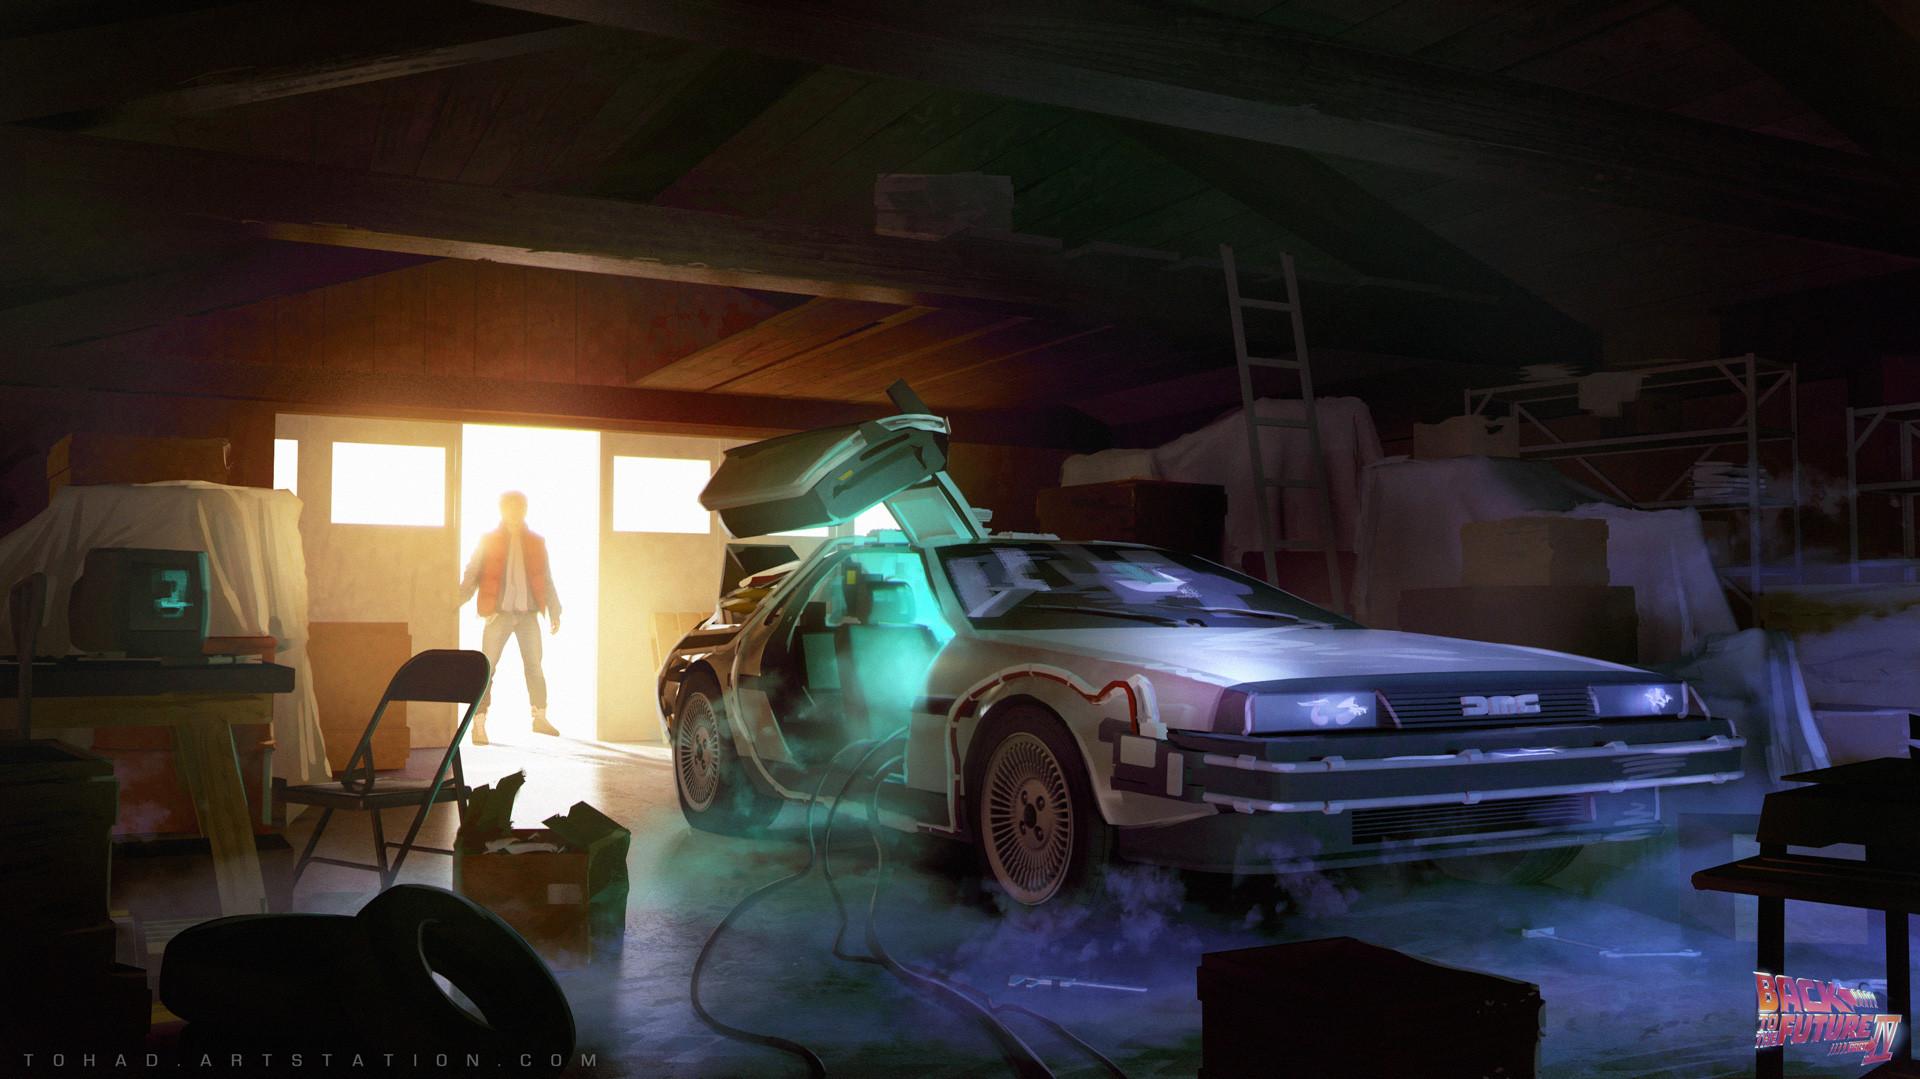 4511961 Marty McFly Back to the Future car magic DMC DeLorean